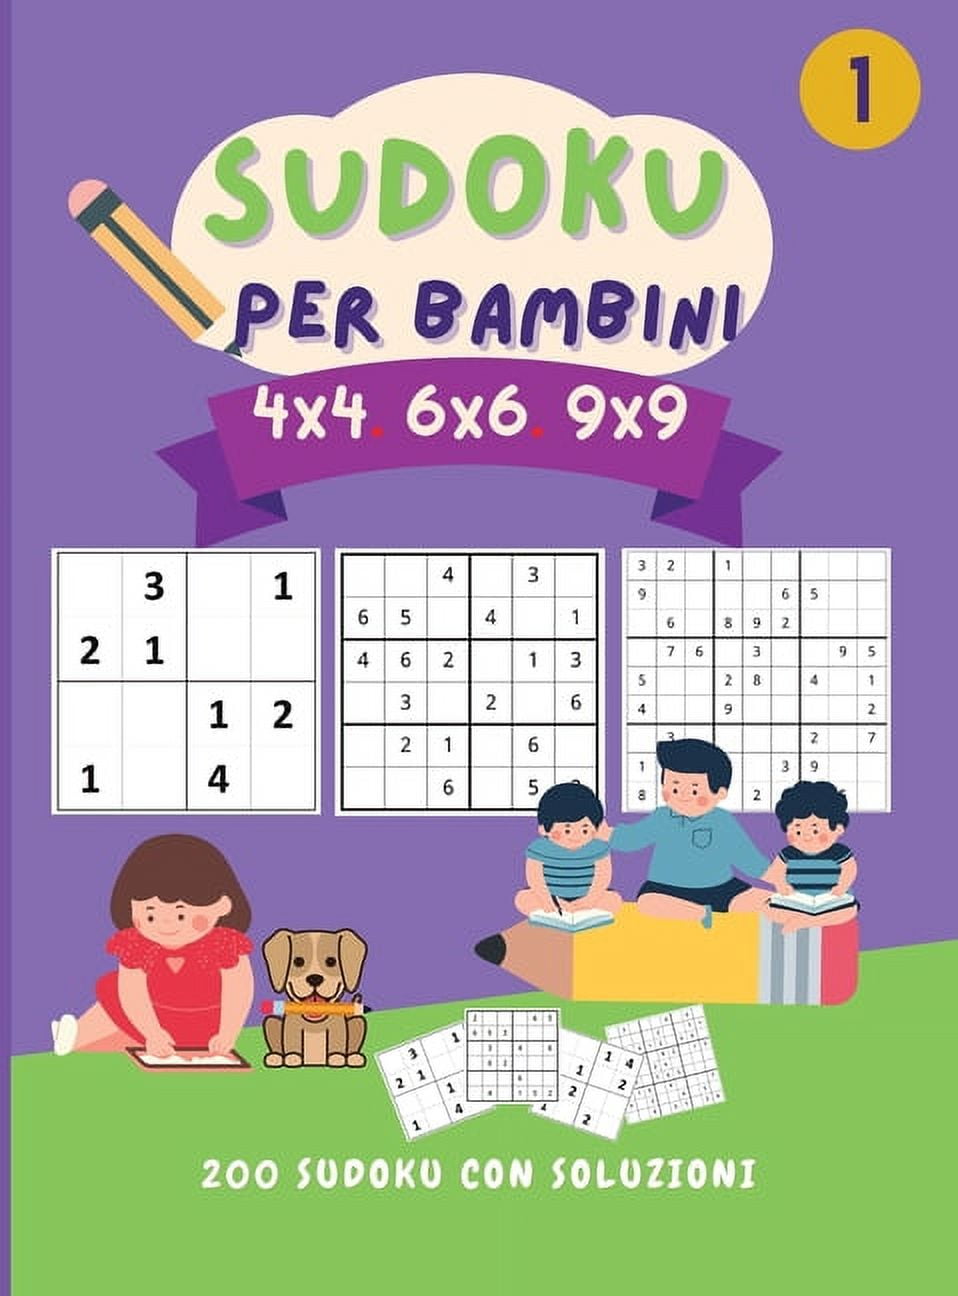 Sudoku per bambini 4x4 6x6 9x9 : 200 straordinari sudoku puzzle